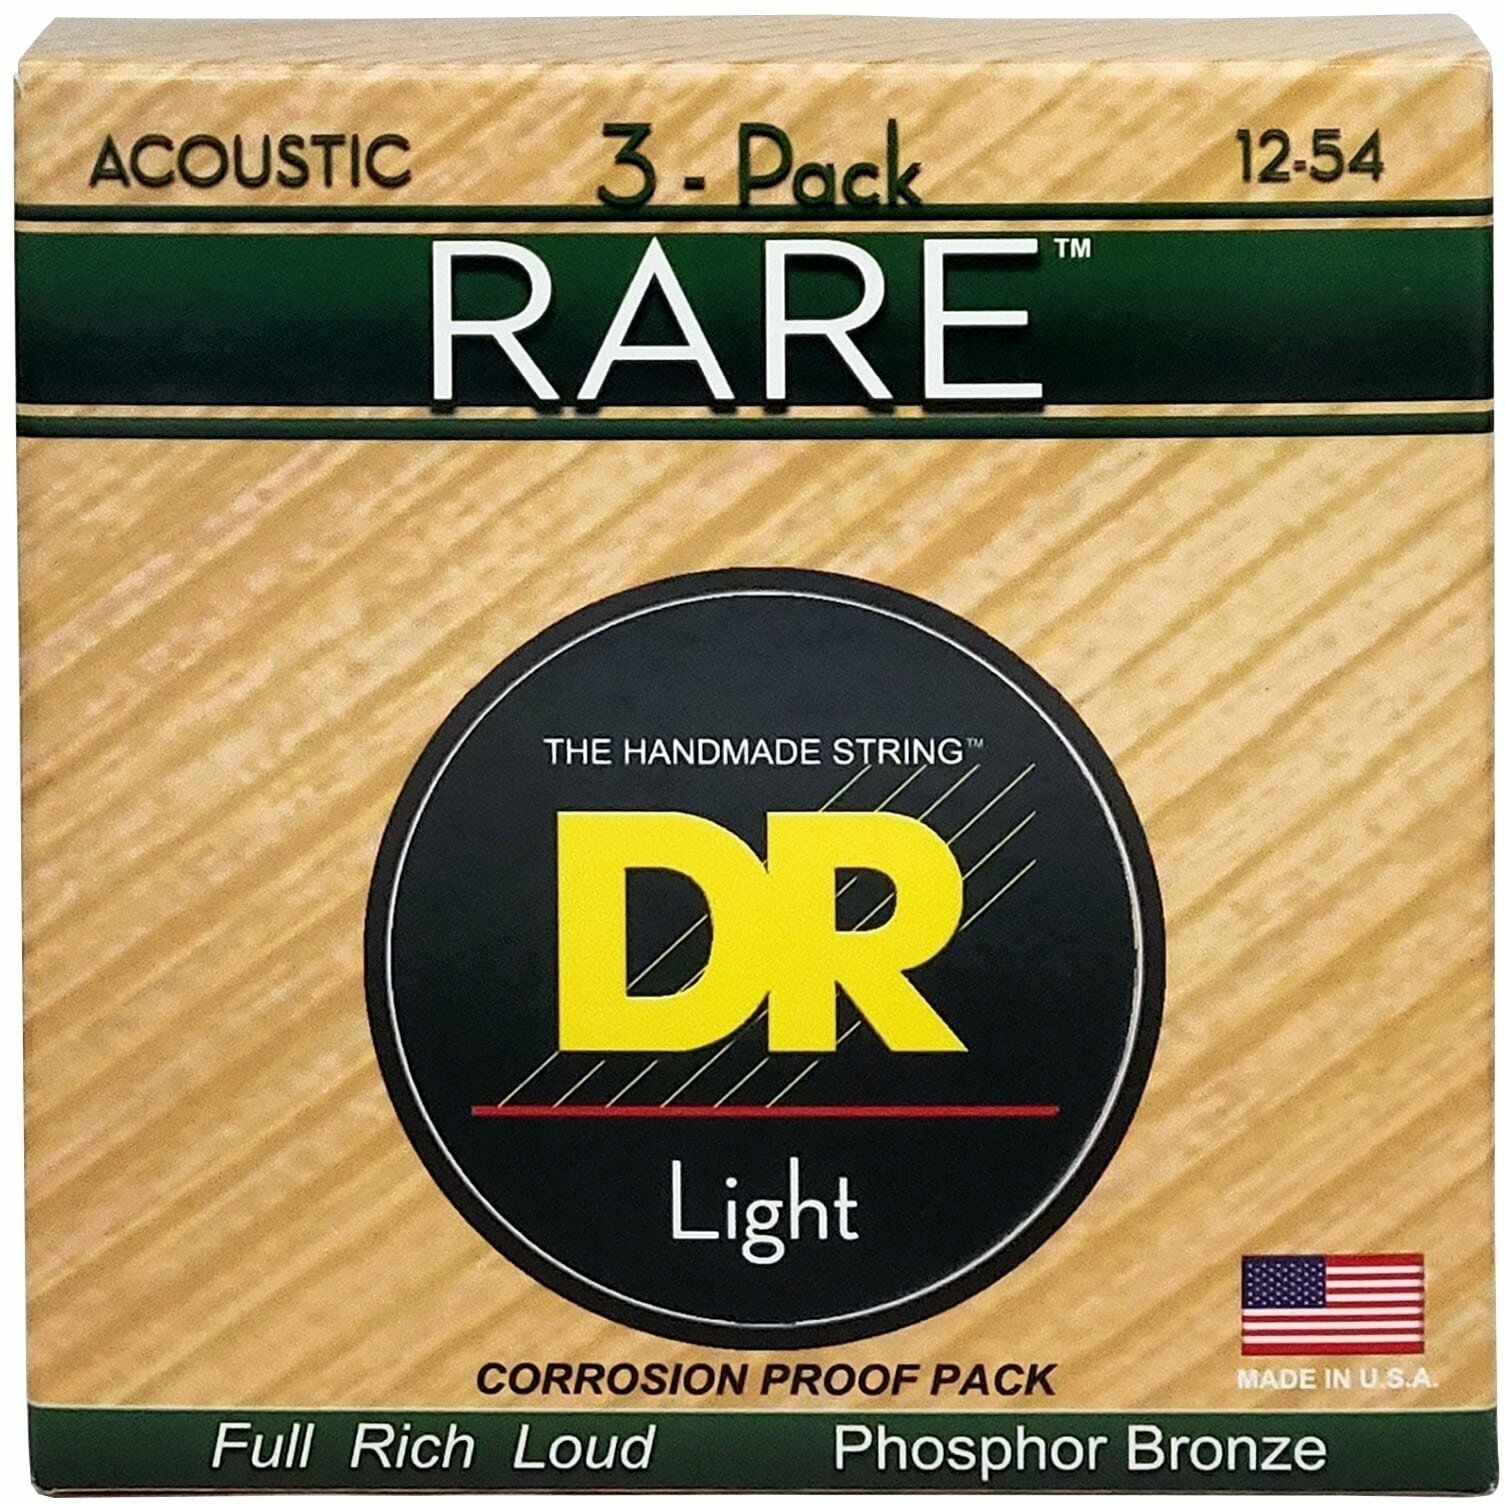 Guitar strings DR Strings RPM-12 Rare 3-Pack